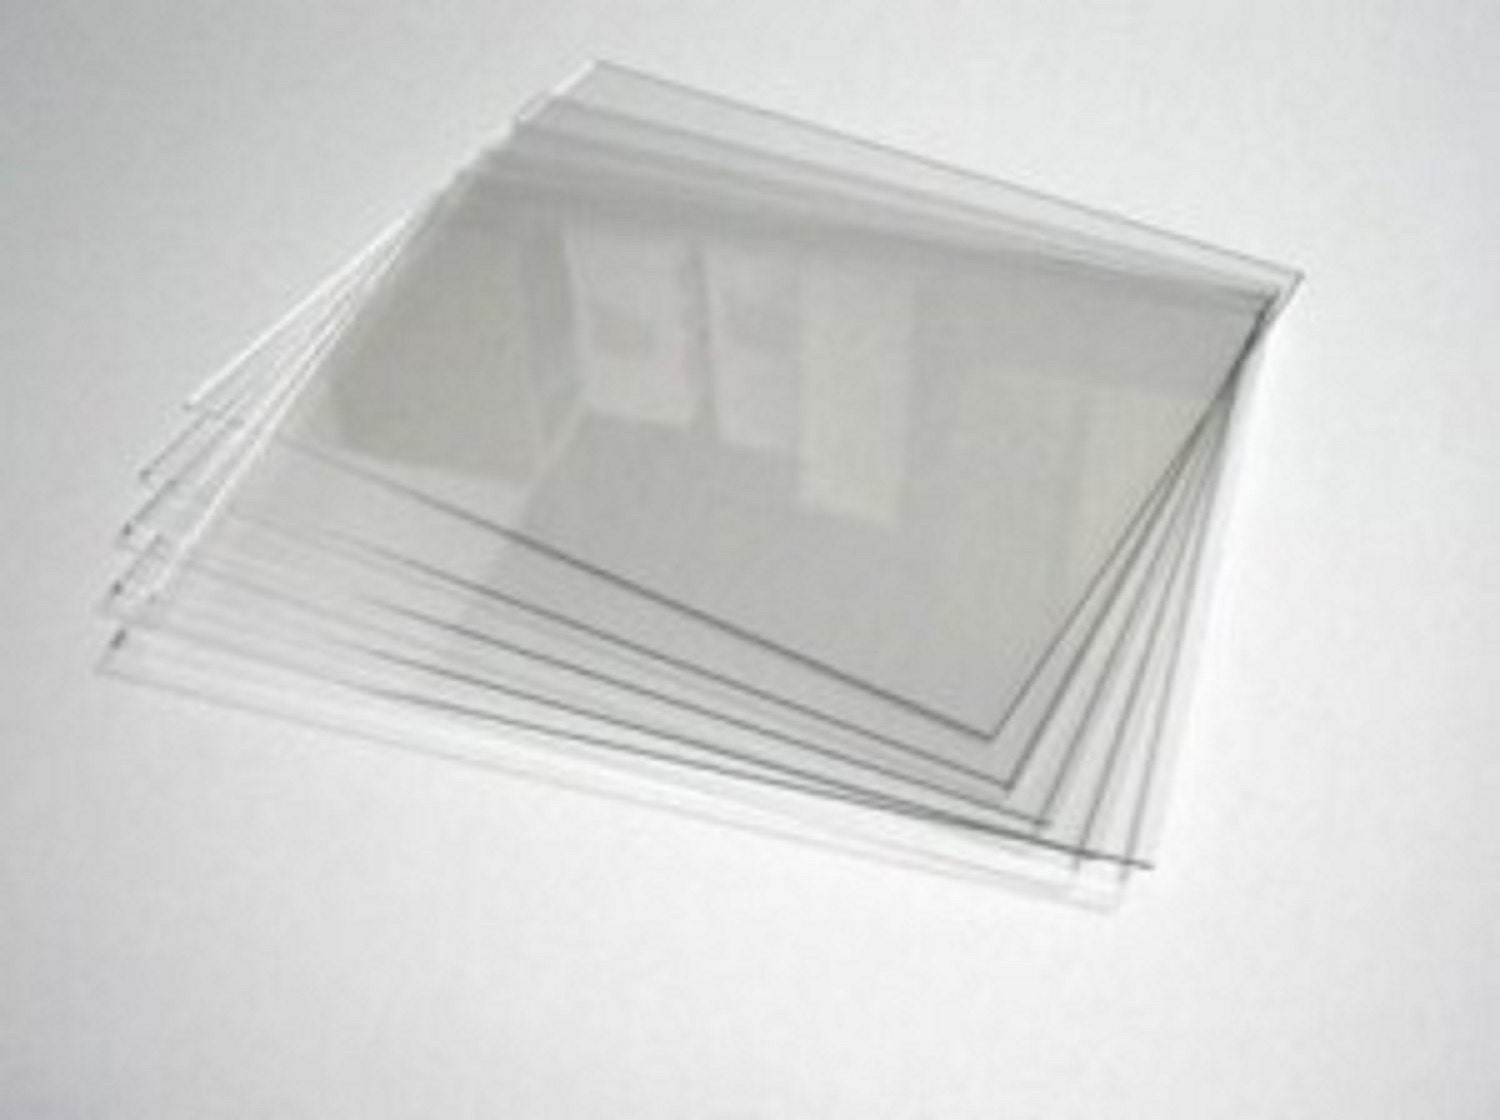 Flexible Lightweight Translucent LDPE Polyethylene Plastic Sheet 24 x 24 x  1/30 (0.030) for Stencil